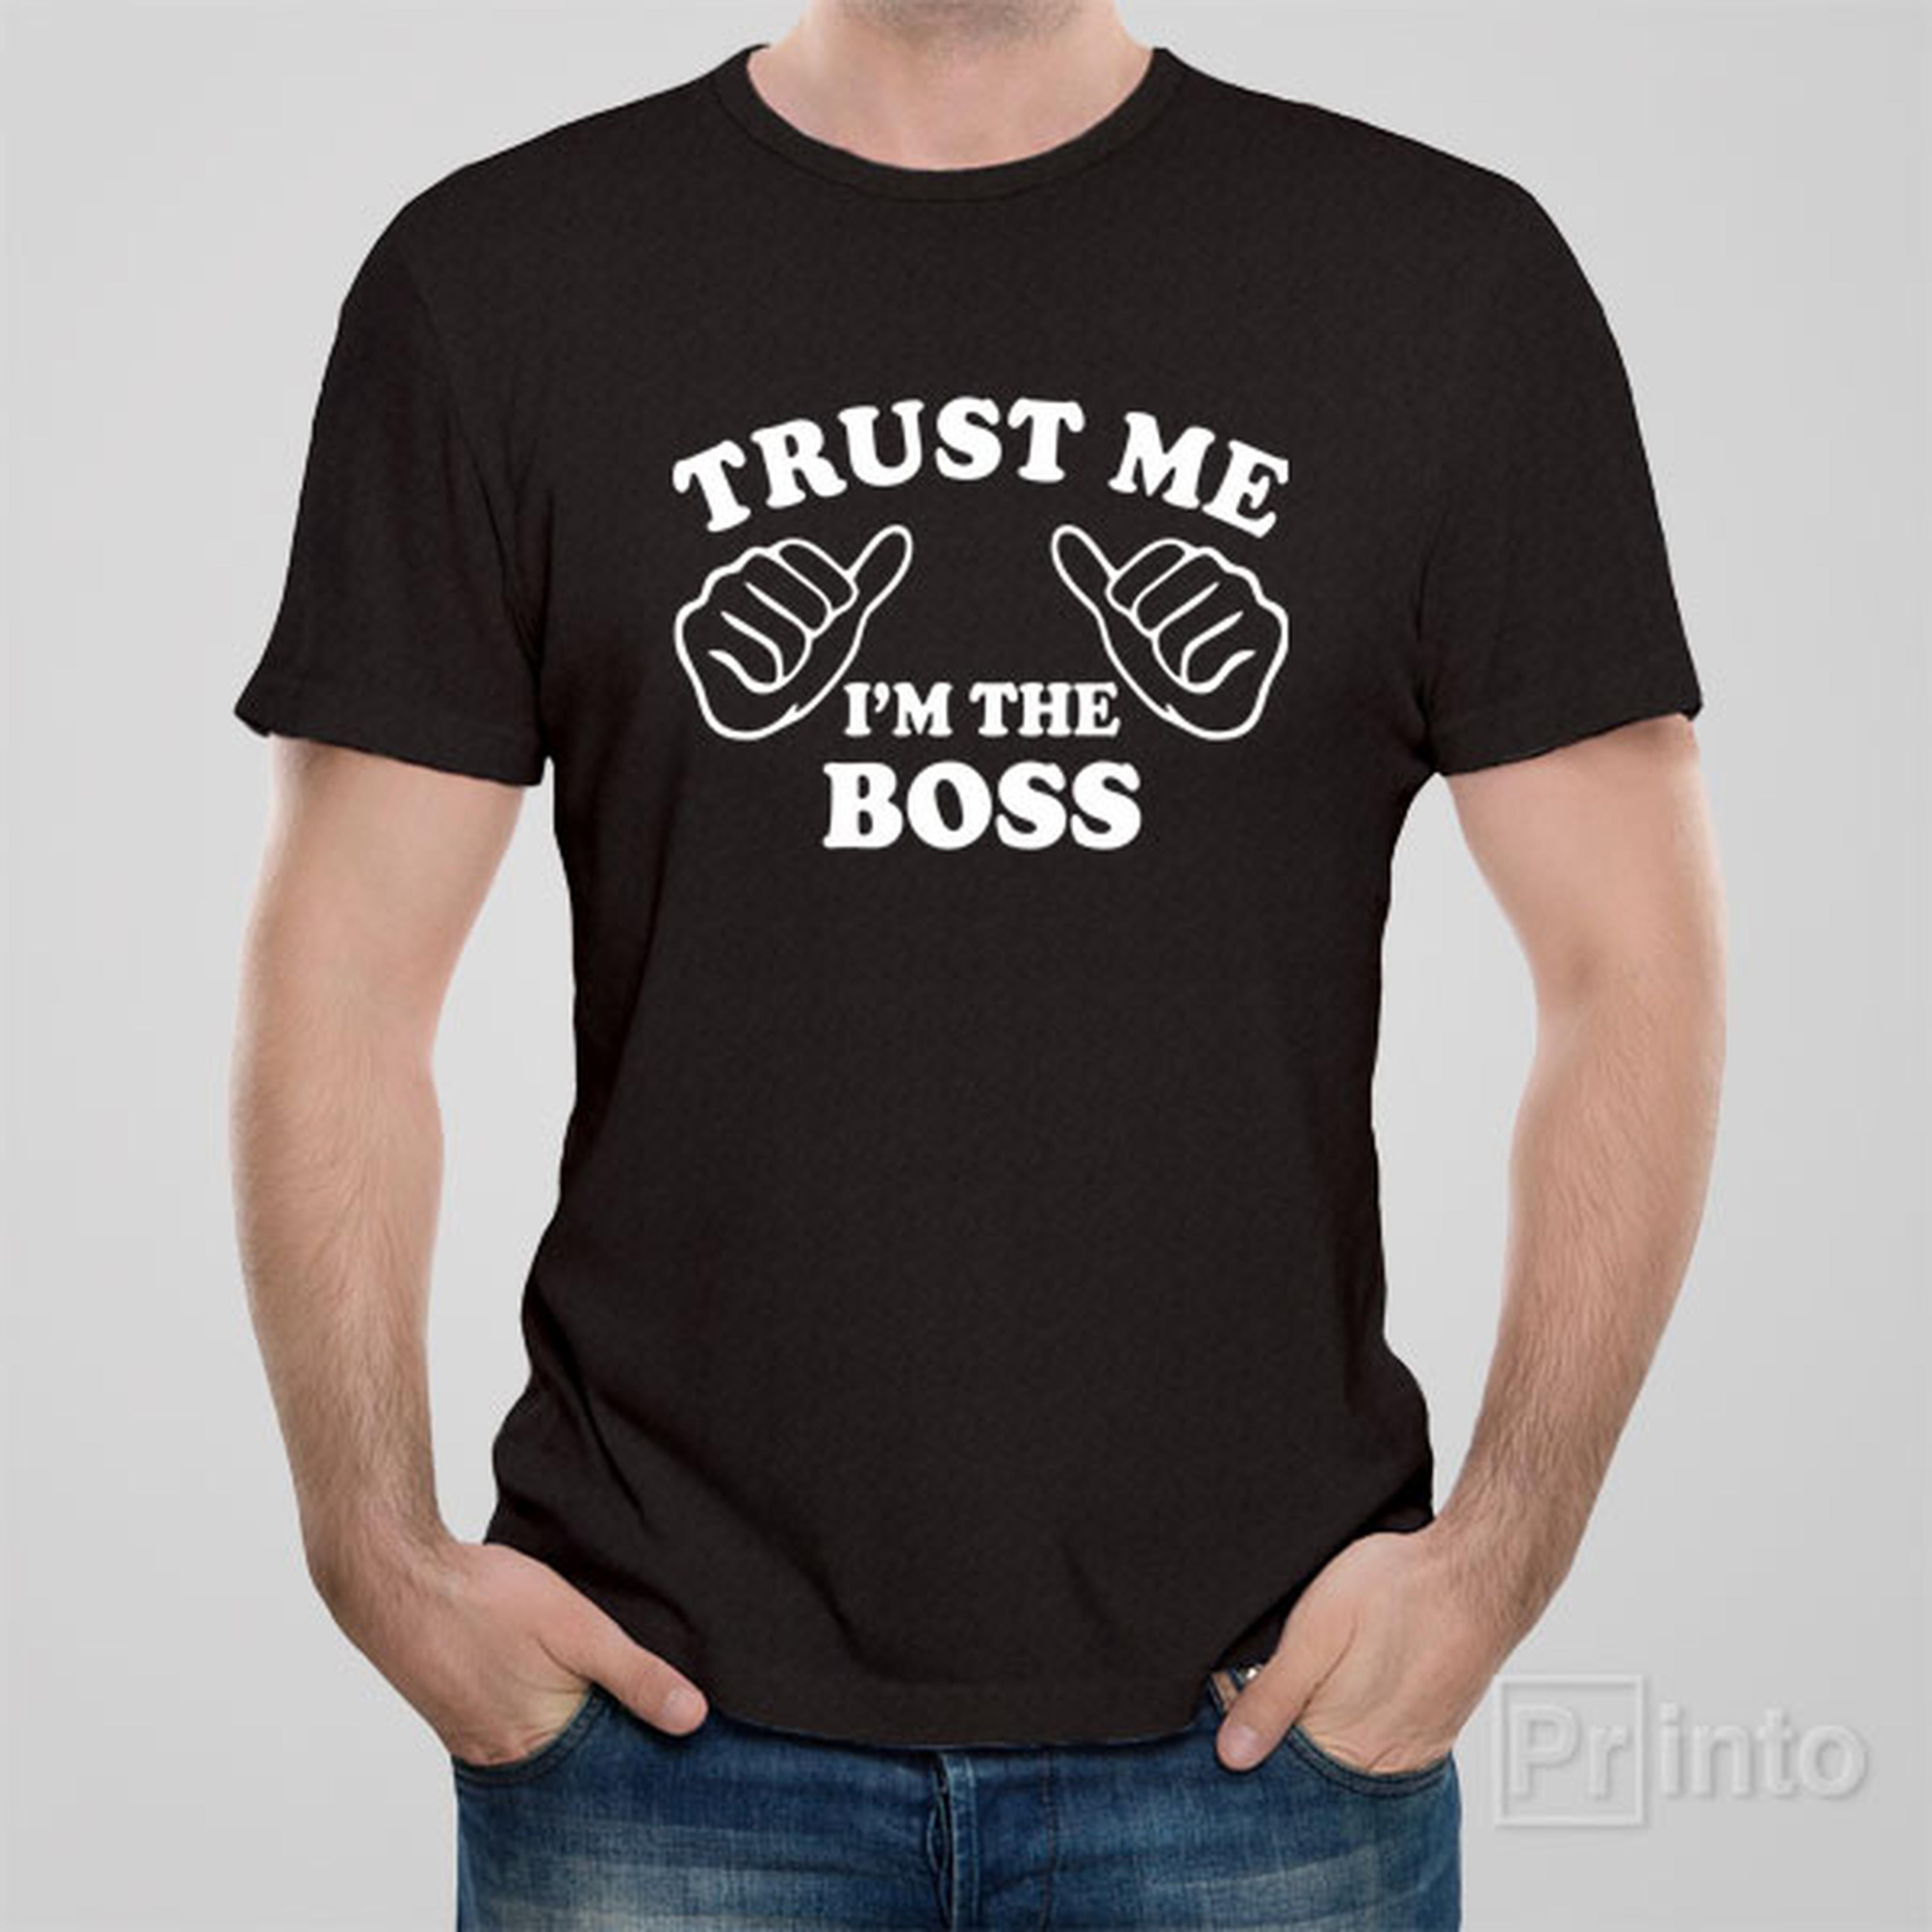 trust-me-i-am-the-boss-t-shirt